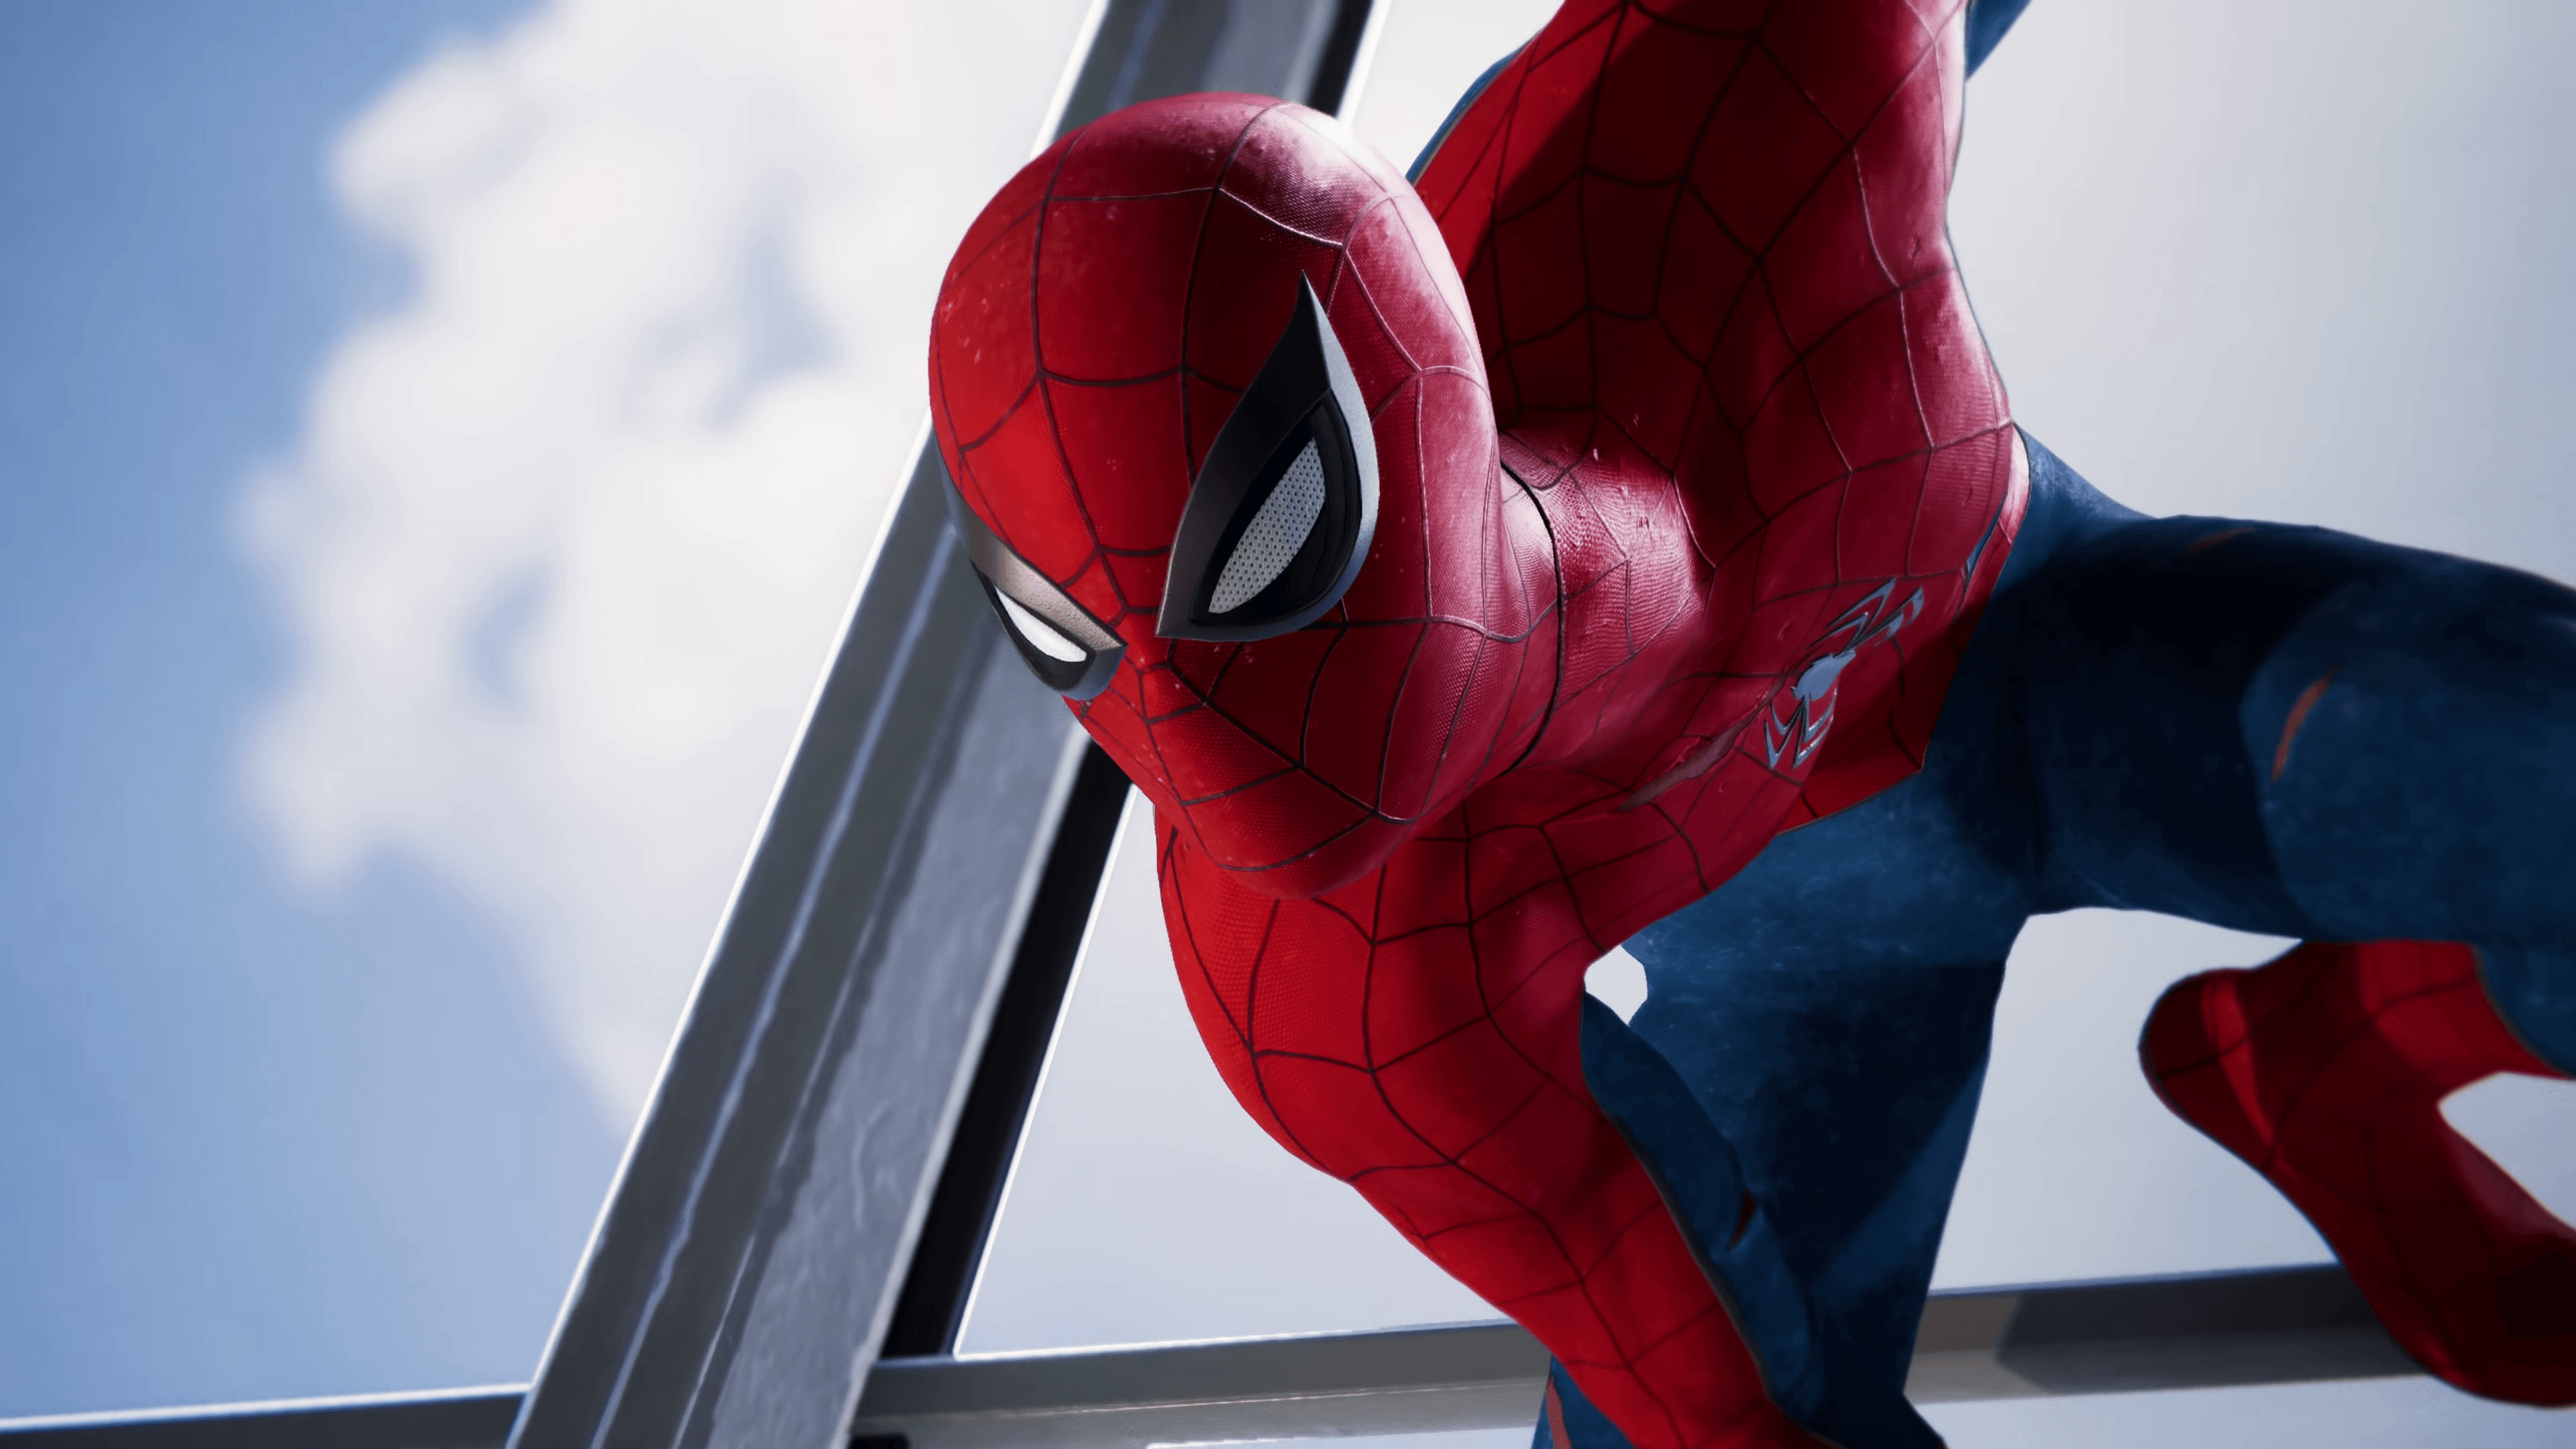 Spider Man PS4 Classic Suit Wallpaper 4k Ultra HD Wallpaper